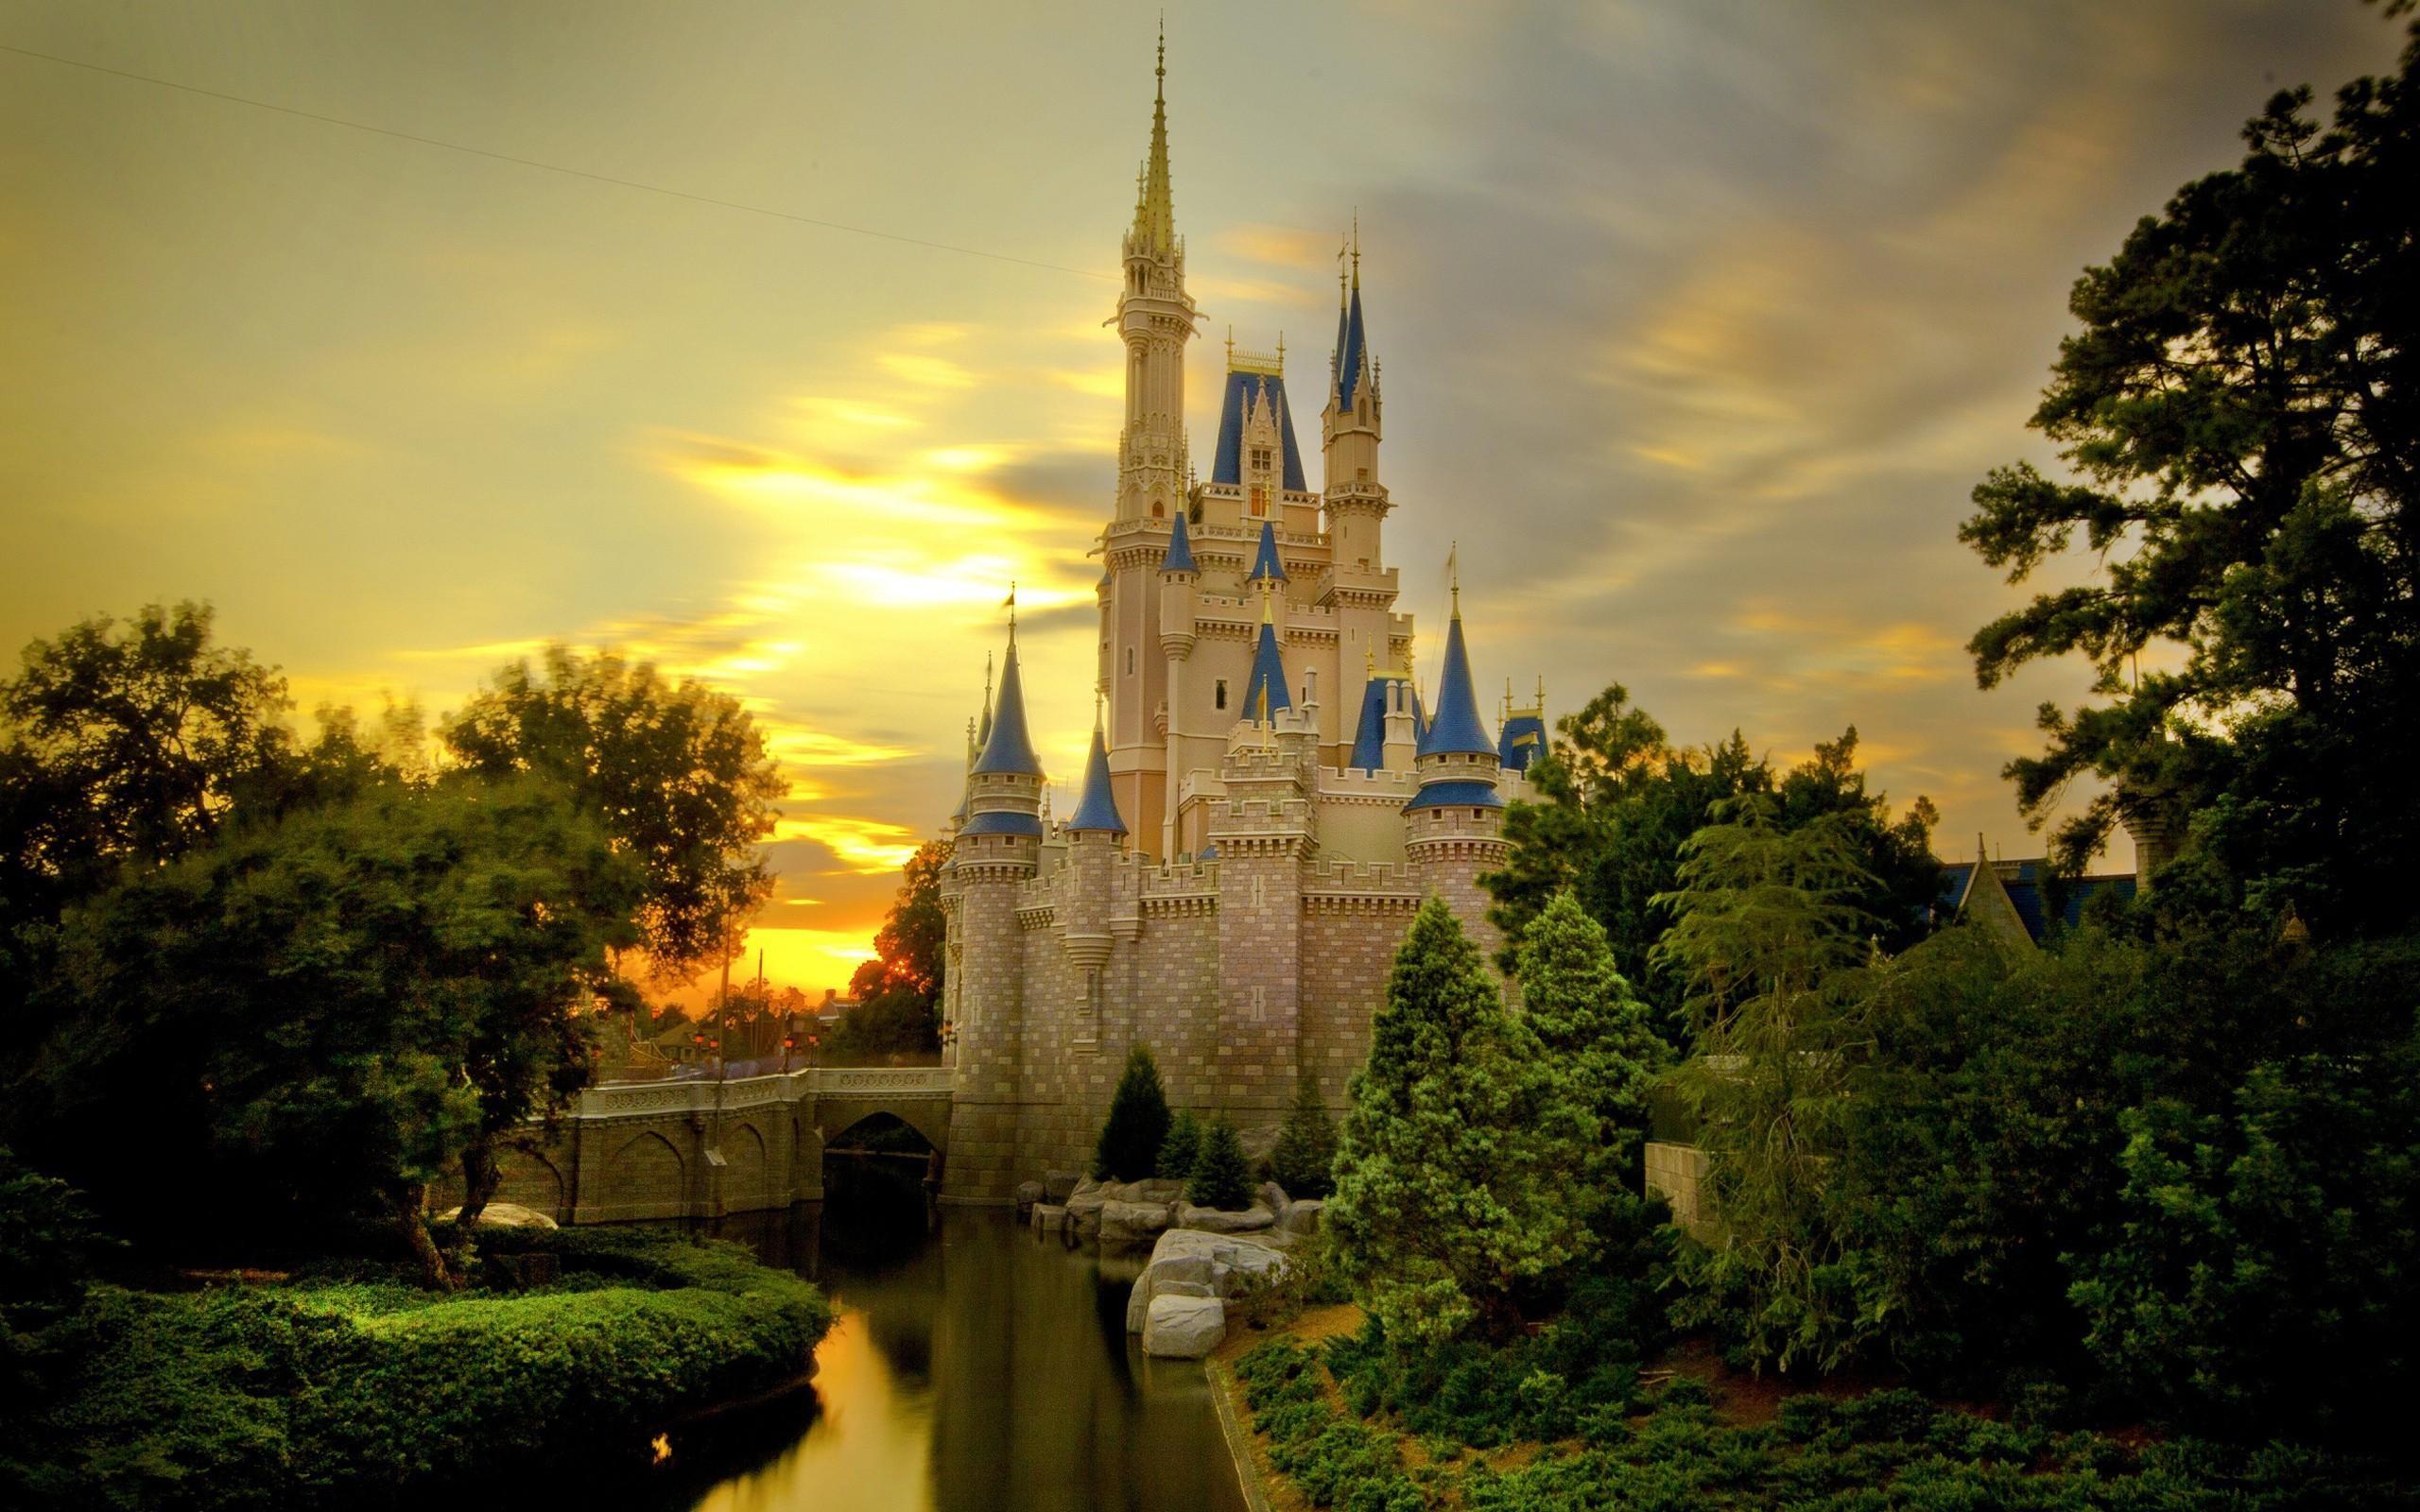 Amazing Beautiful Cinderella Castle Image Free Download. HD